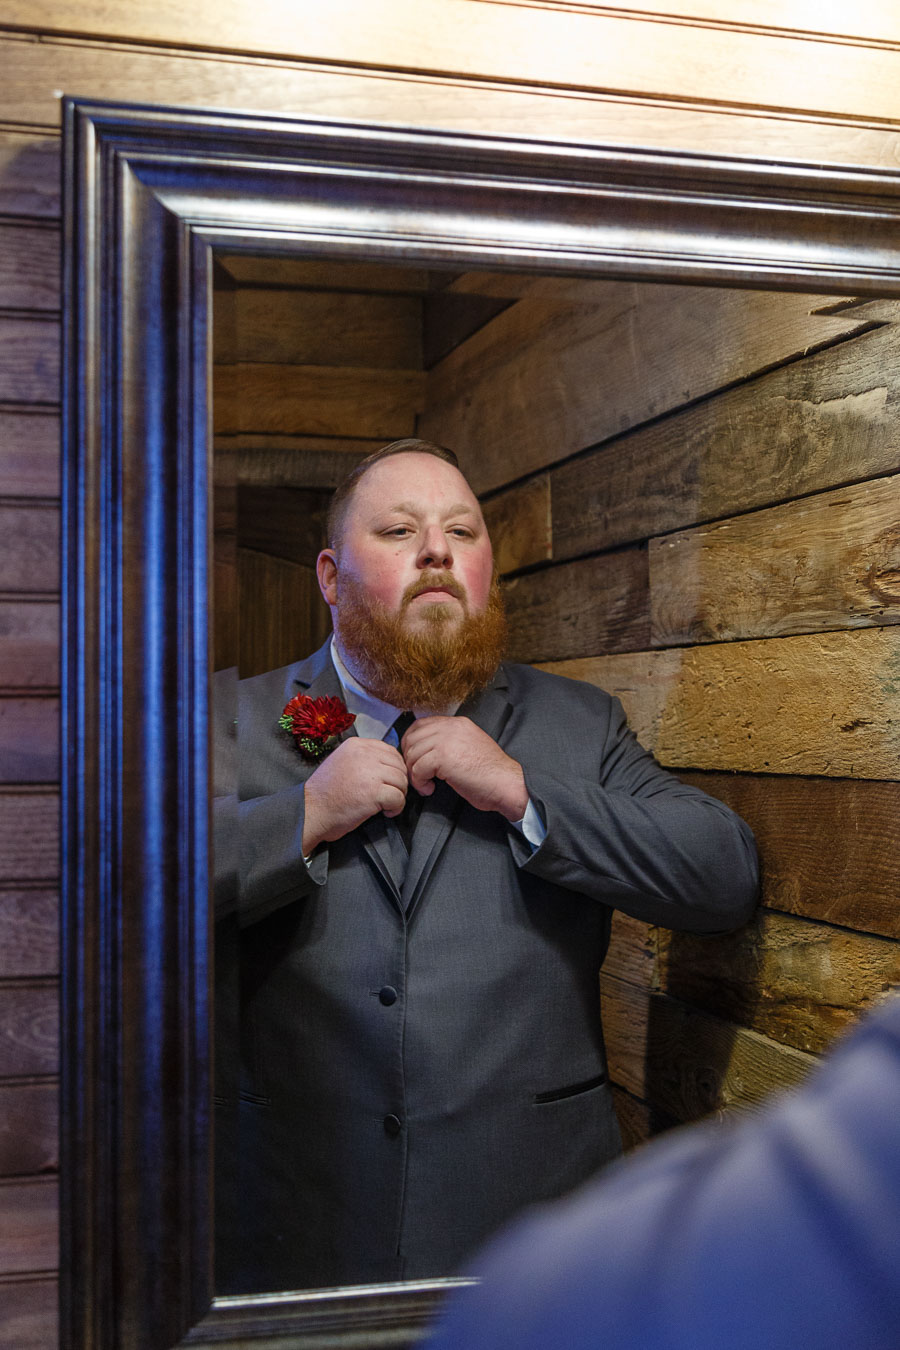 REAL WEDDING | RUSTIC GLAM TEXAS WEDDING | C.Baron Photography | Pretty Pear Bride